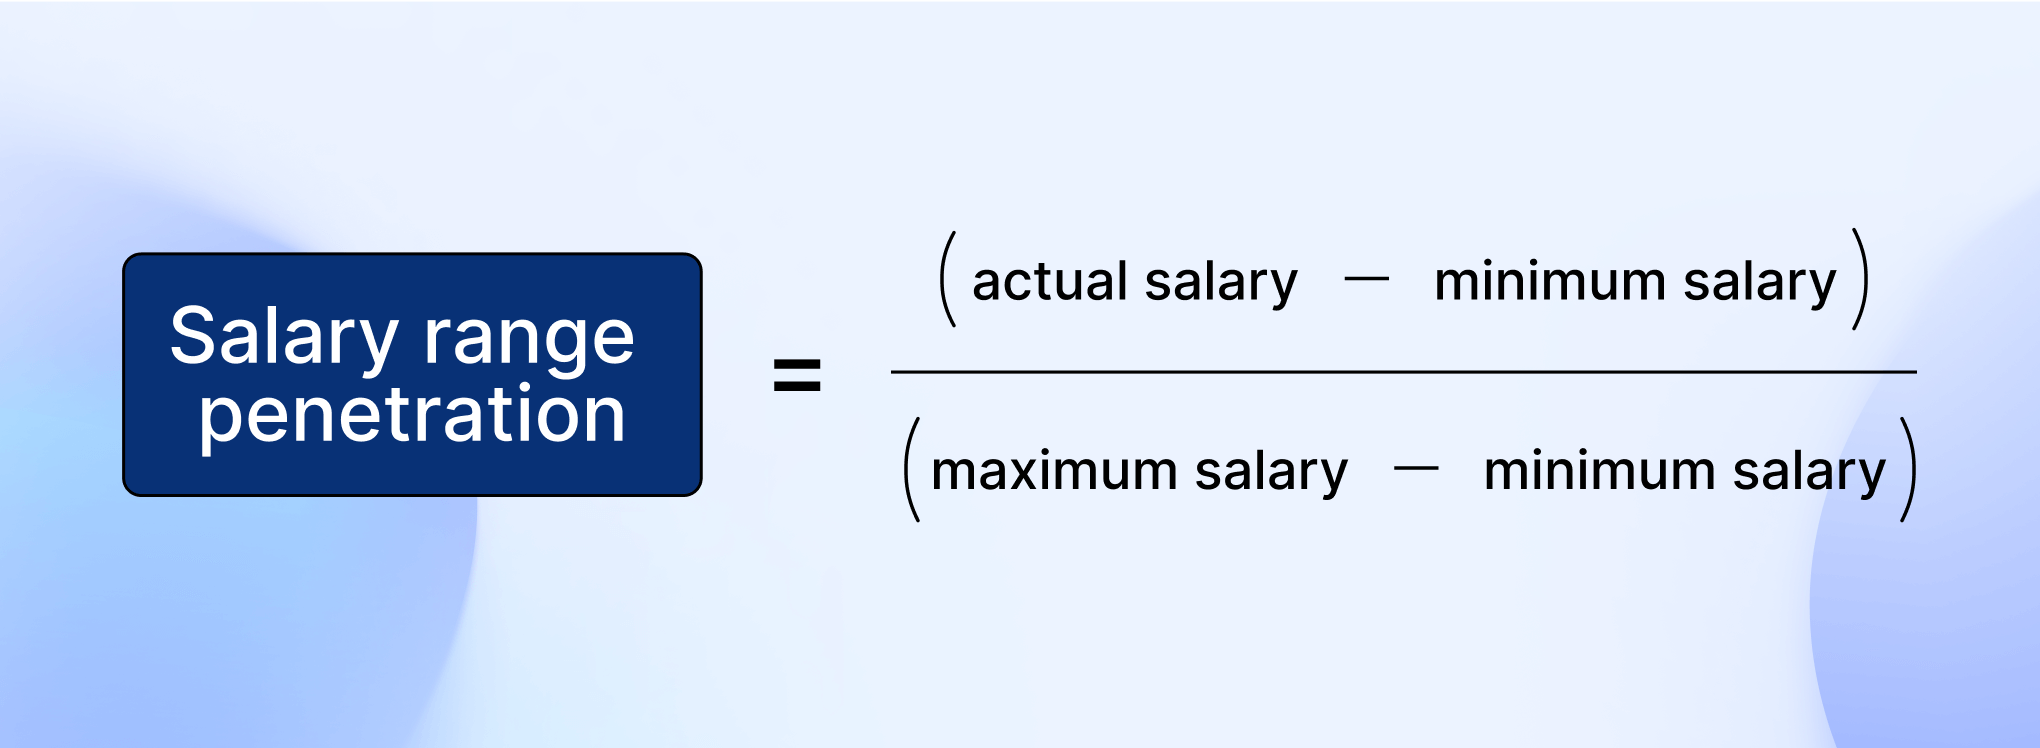 Salary range penetration = (actual salary - minimum salary) ÷ (maximum salary - minimum salary)